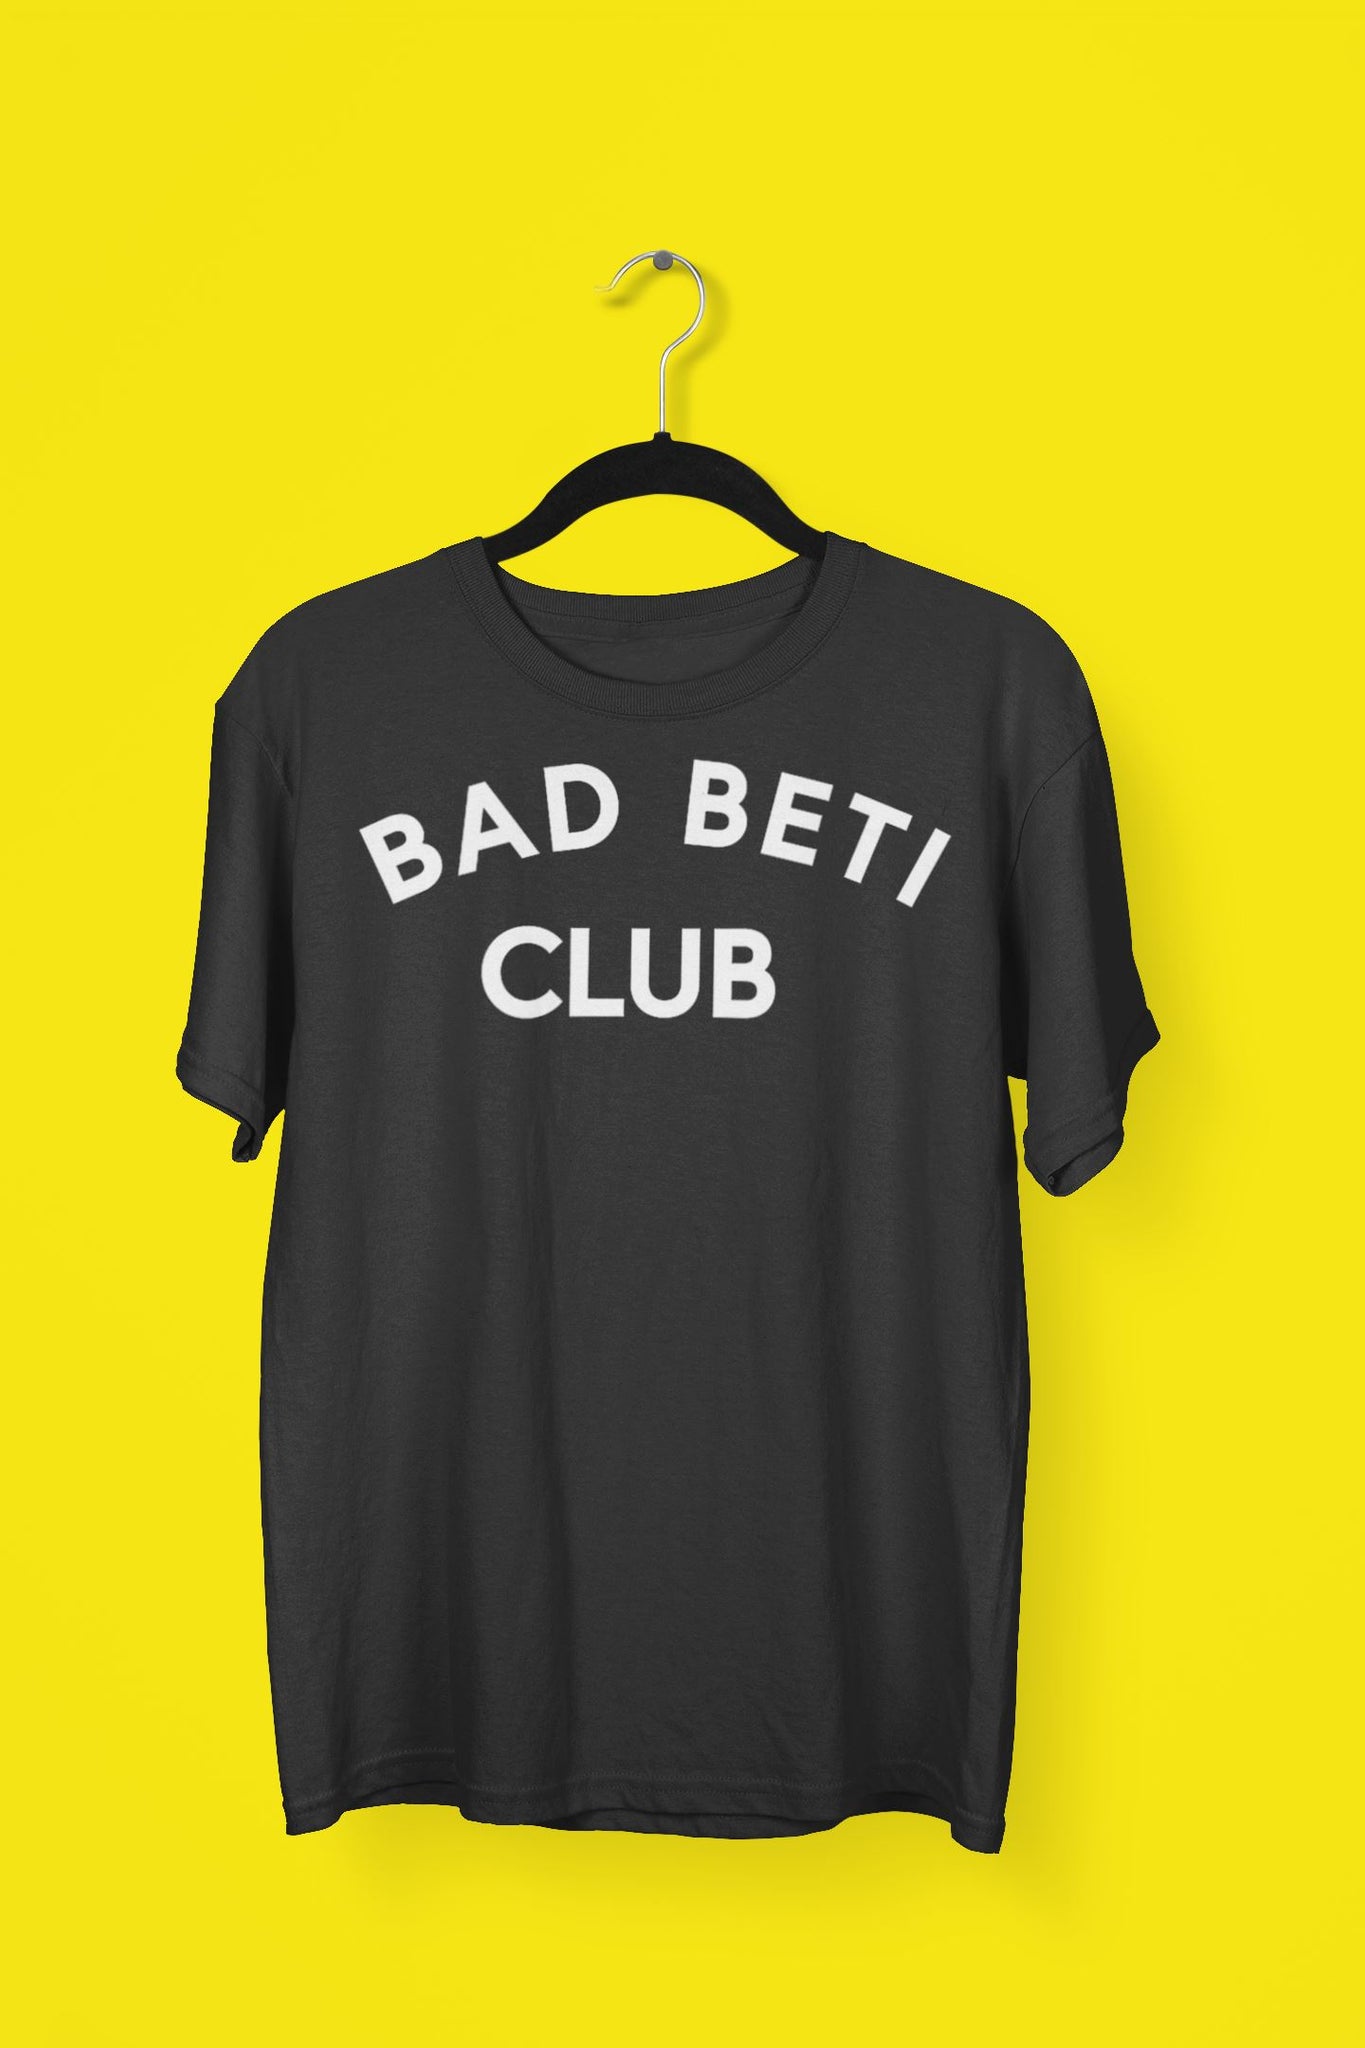 Bad Beti Club Exclusive Black T Shirt for Women freeshipping - Catch My Drift India